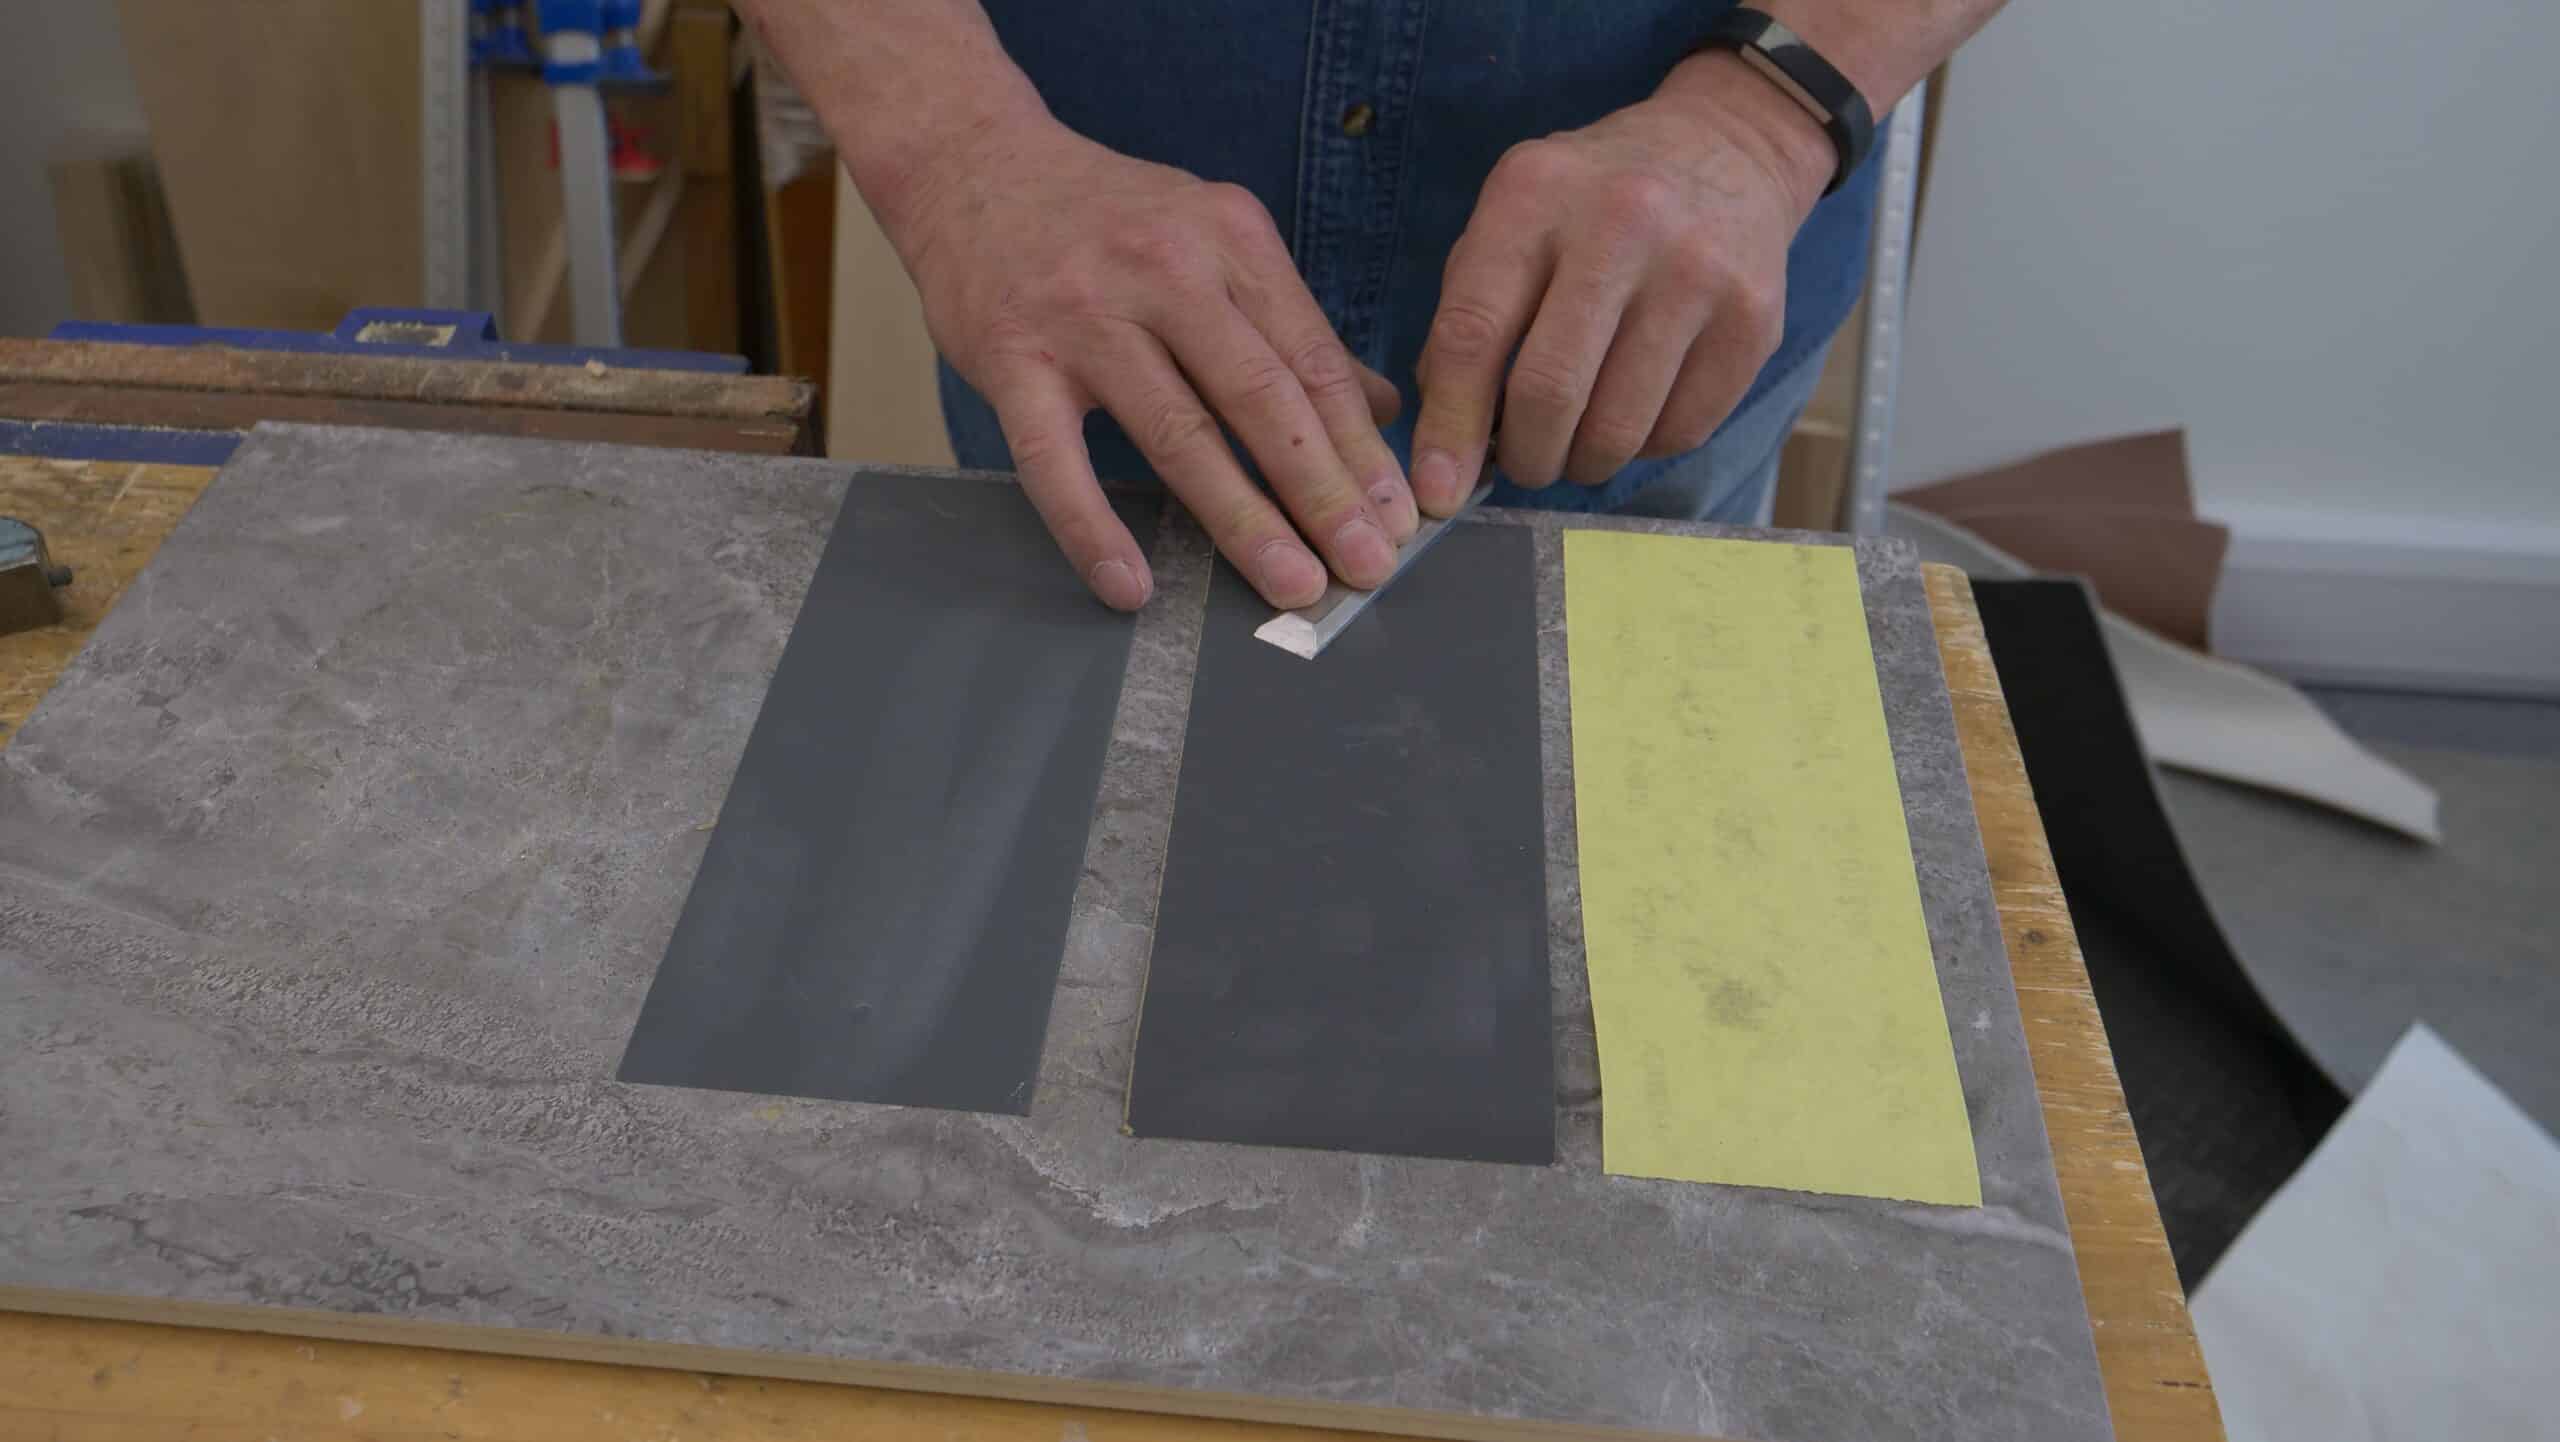 Initialising on the medium abrasive paper